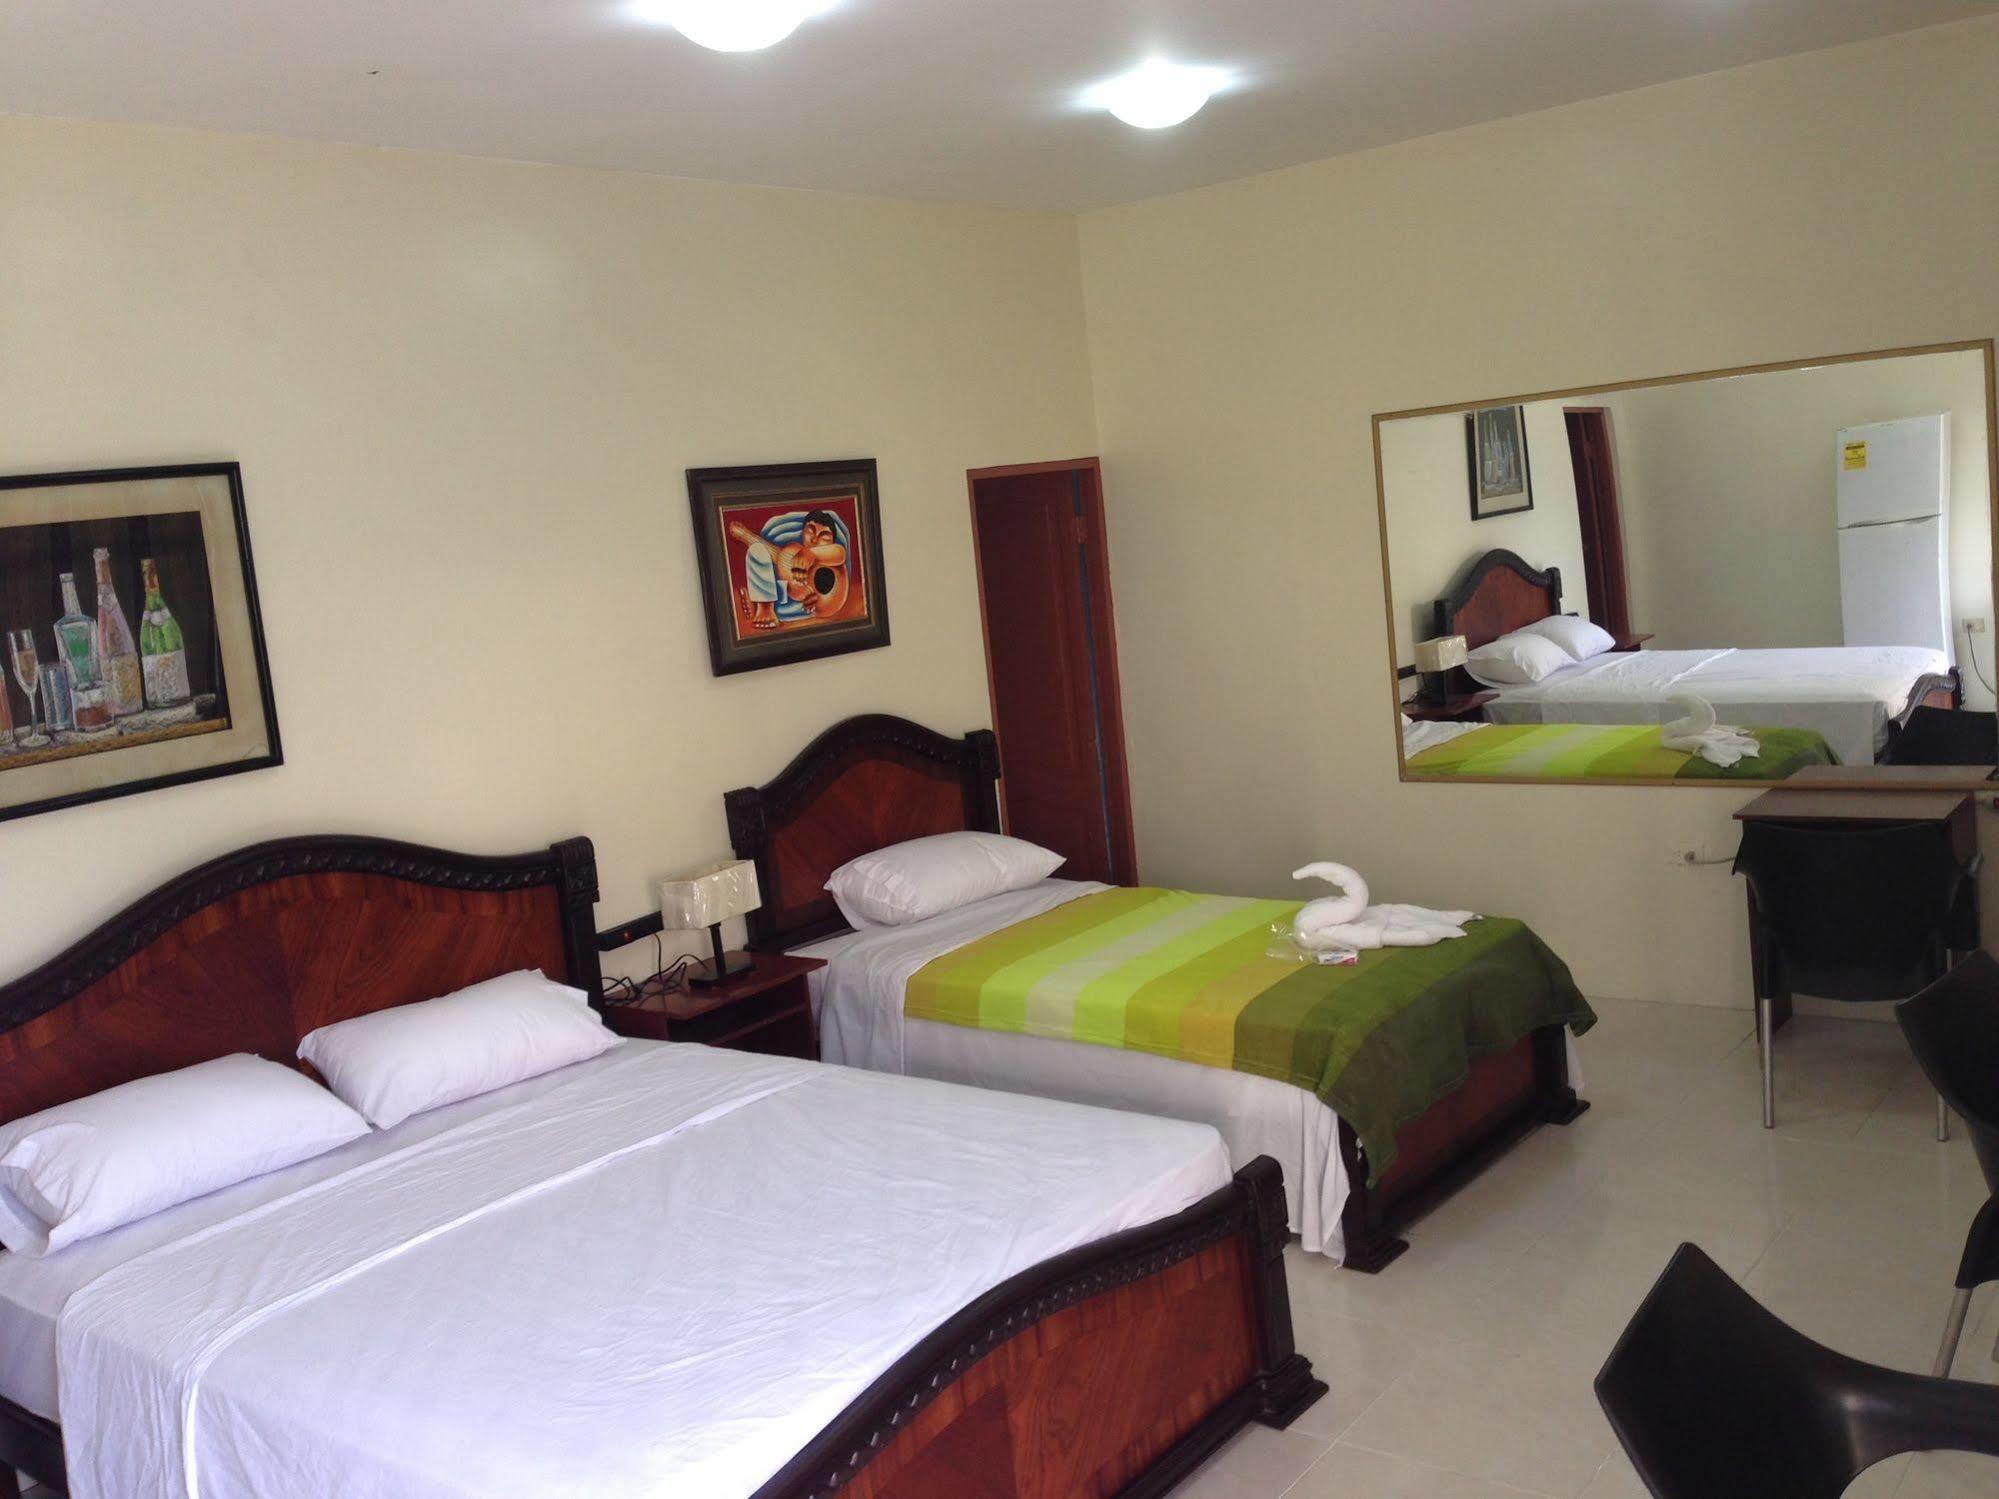 Hotel Mundialcity Guayaquil Esterno foto